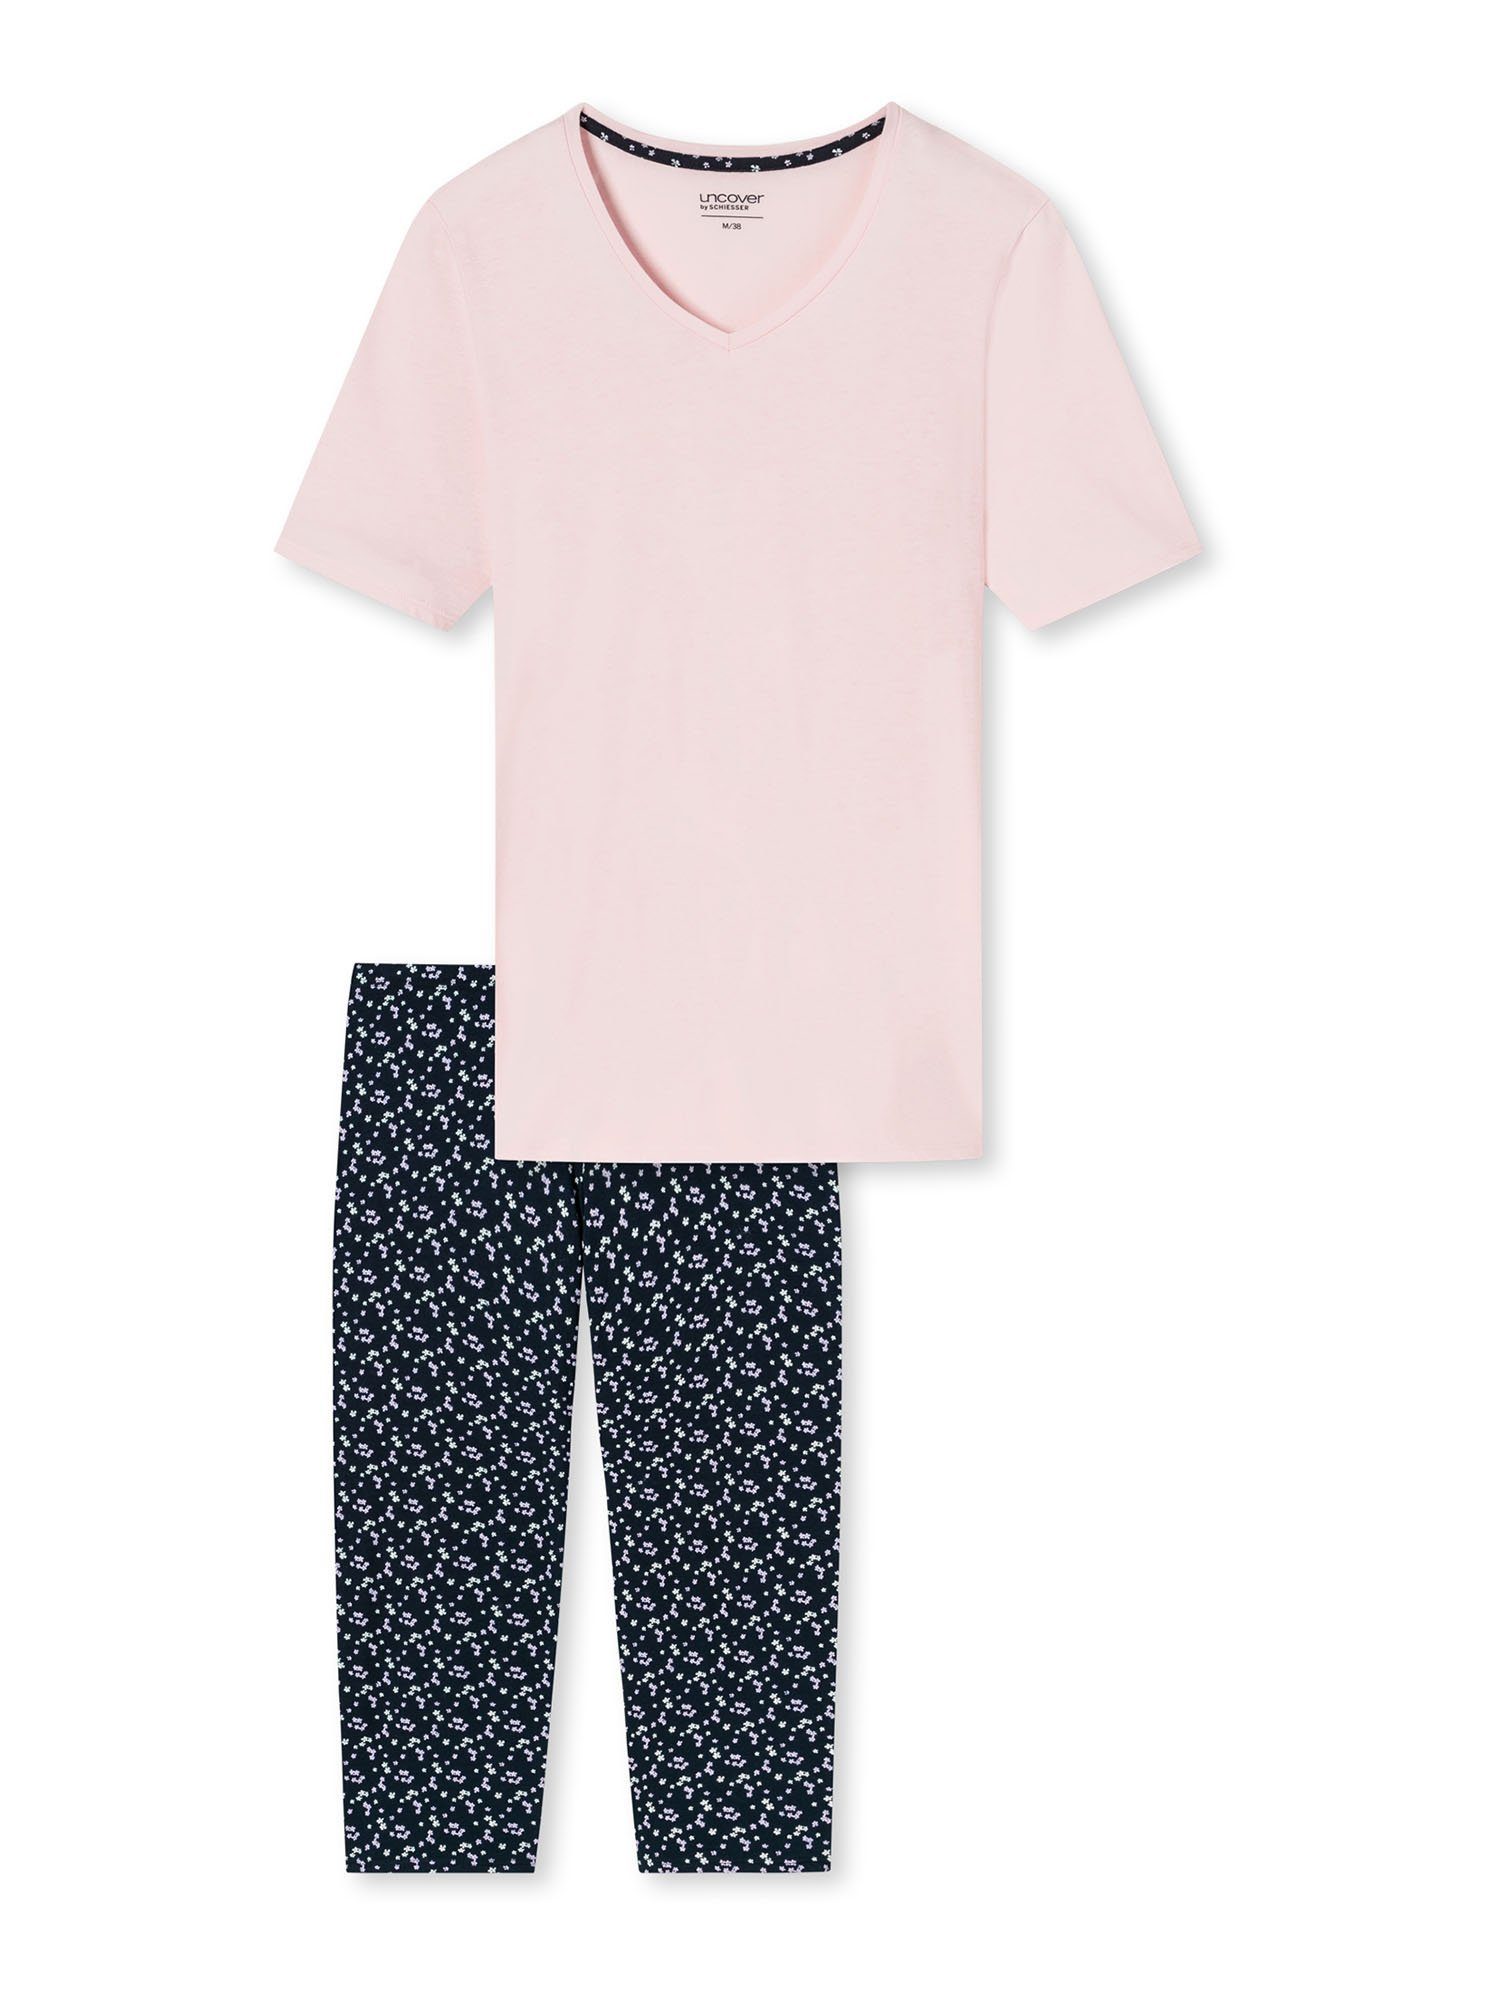 tlg) (2 Damen Schiesser Schlafanzug rosé Pyjama